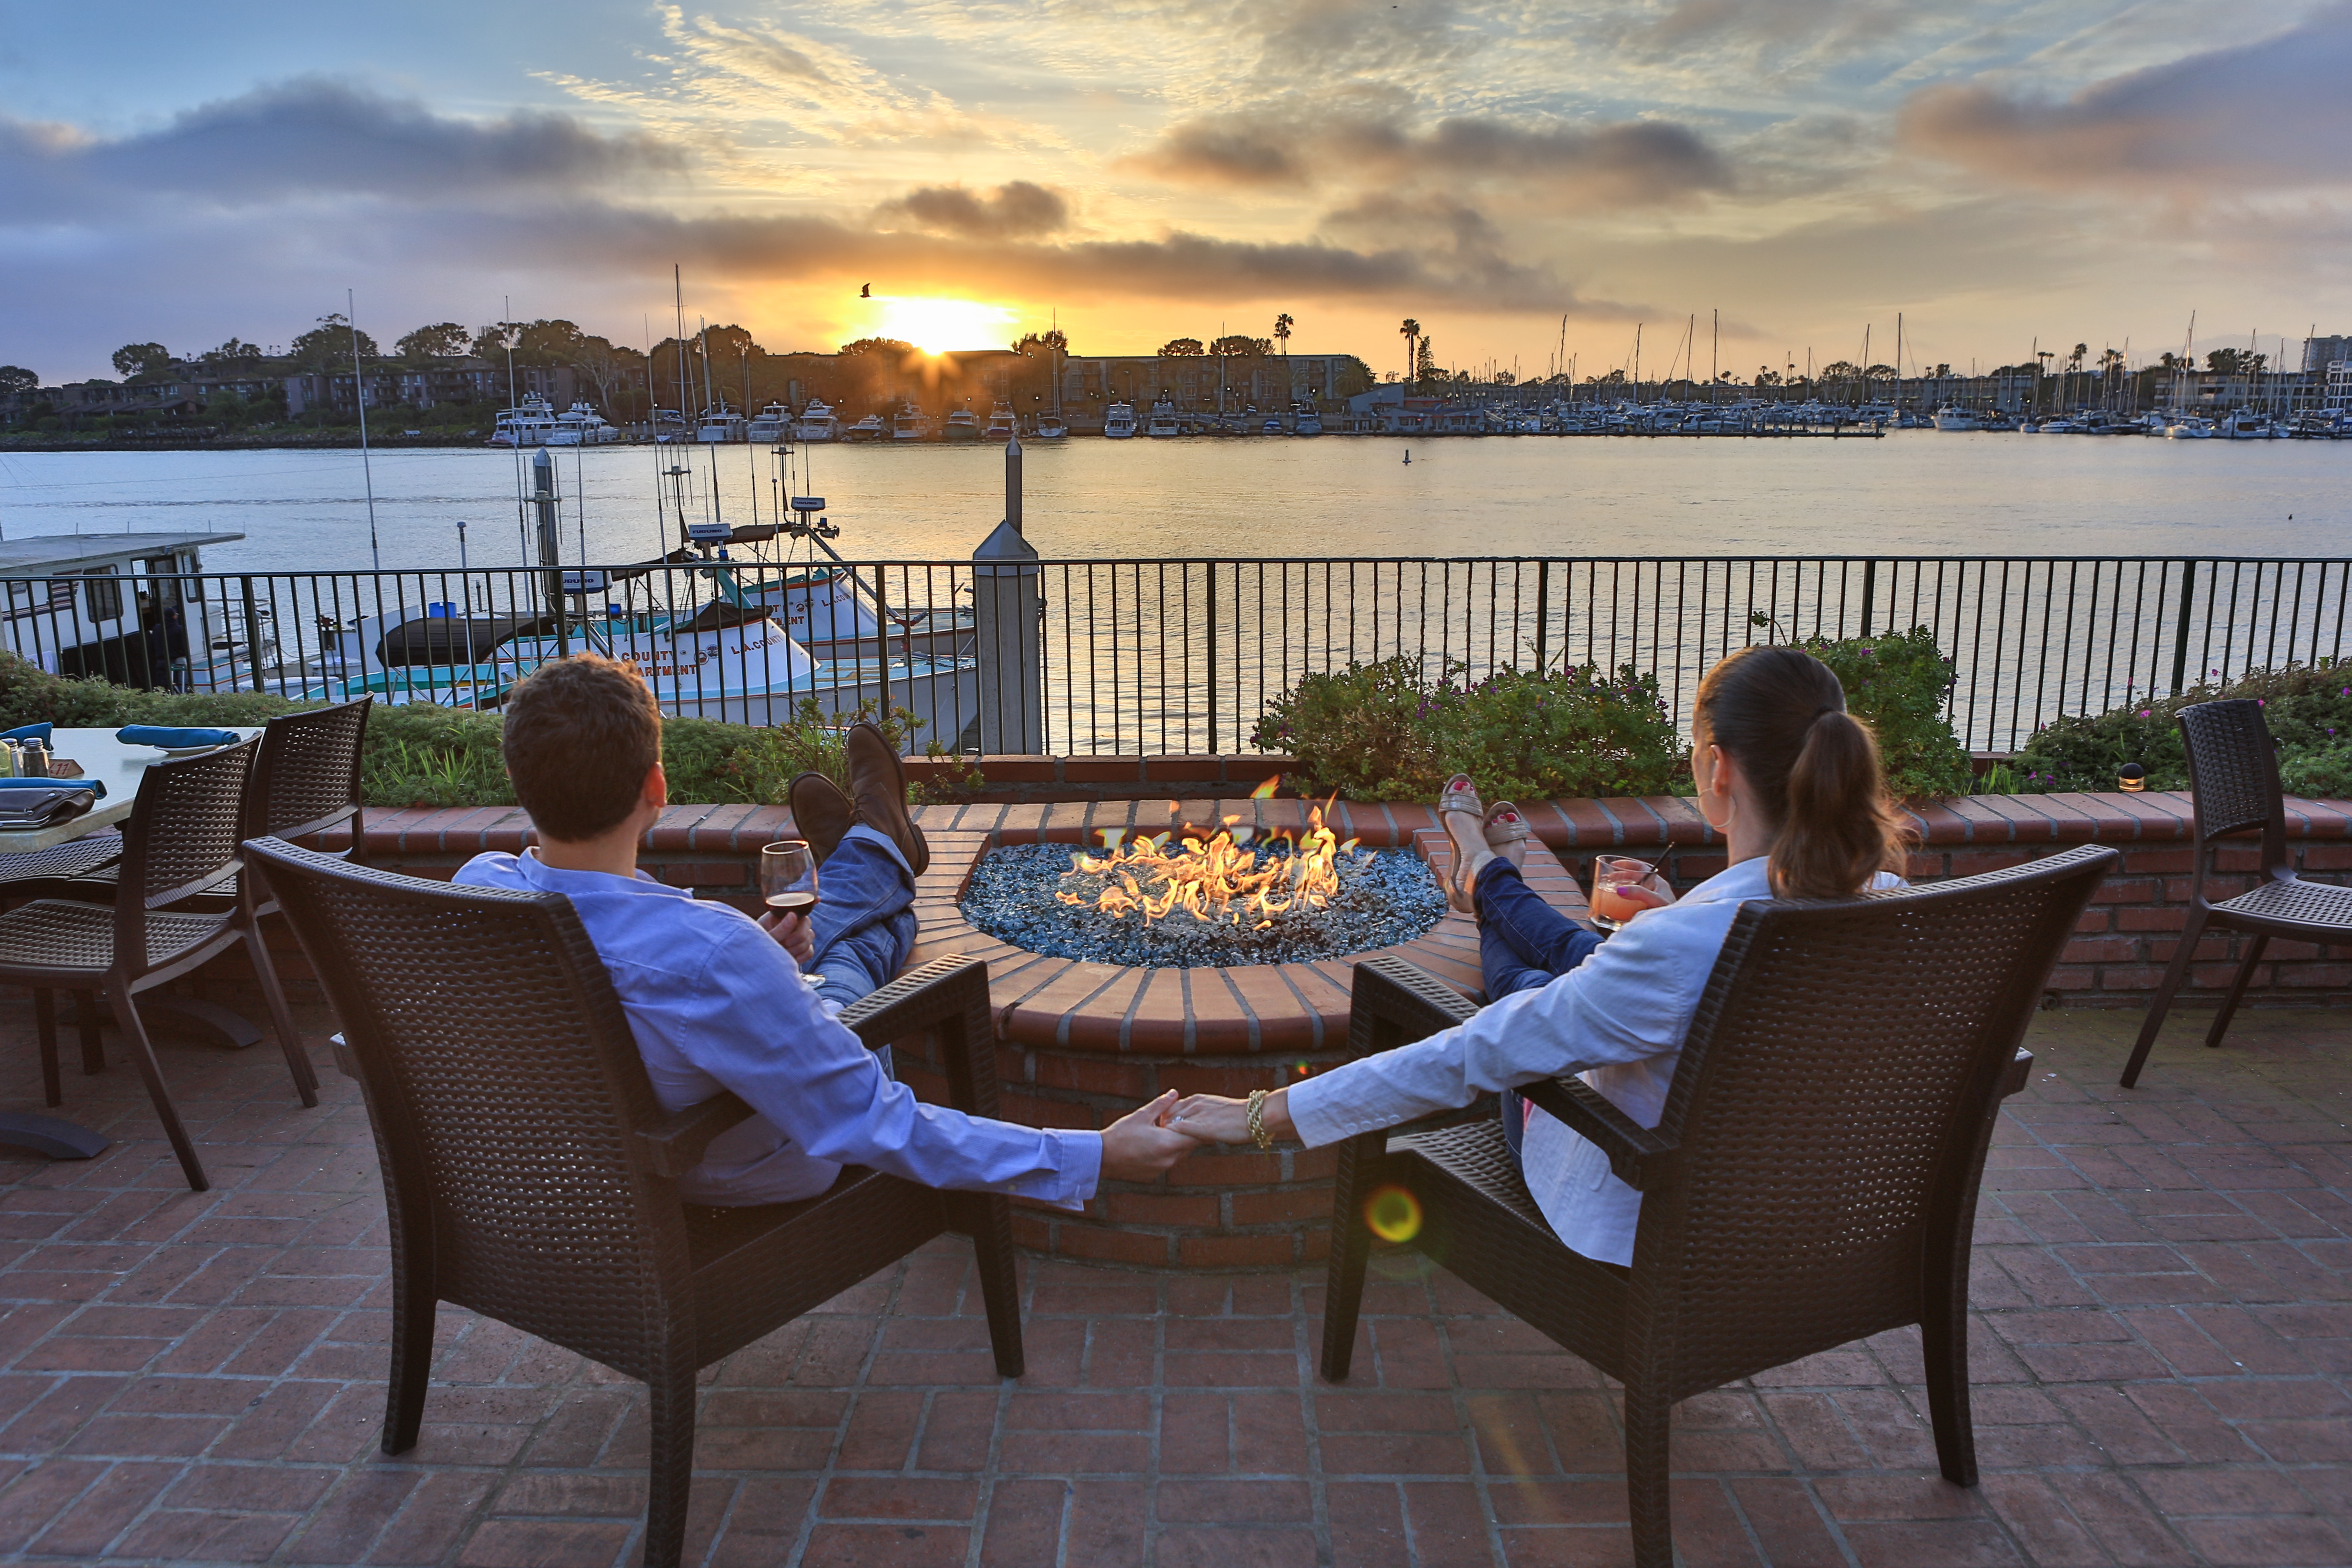 couple enjoying fireplace and drinks at sunset